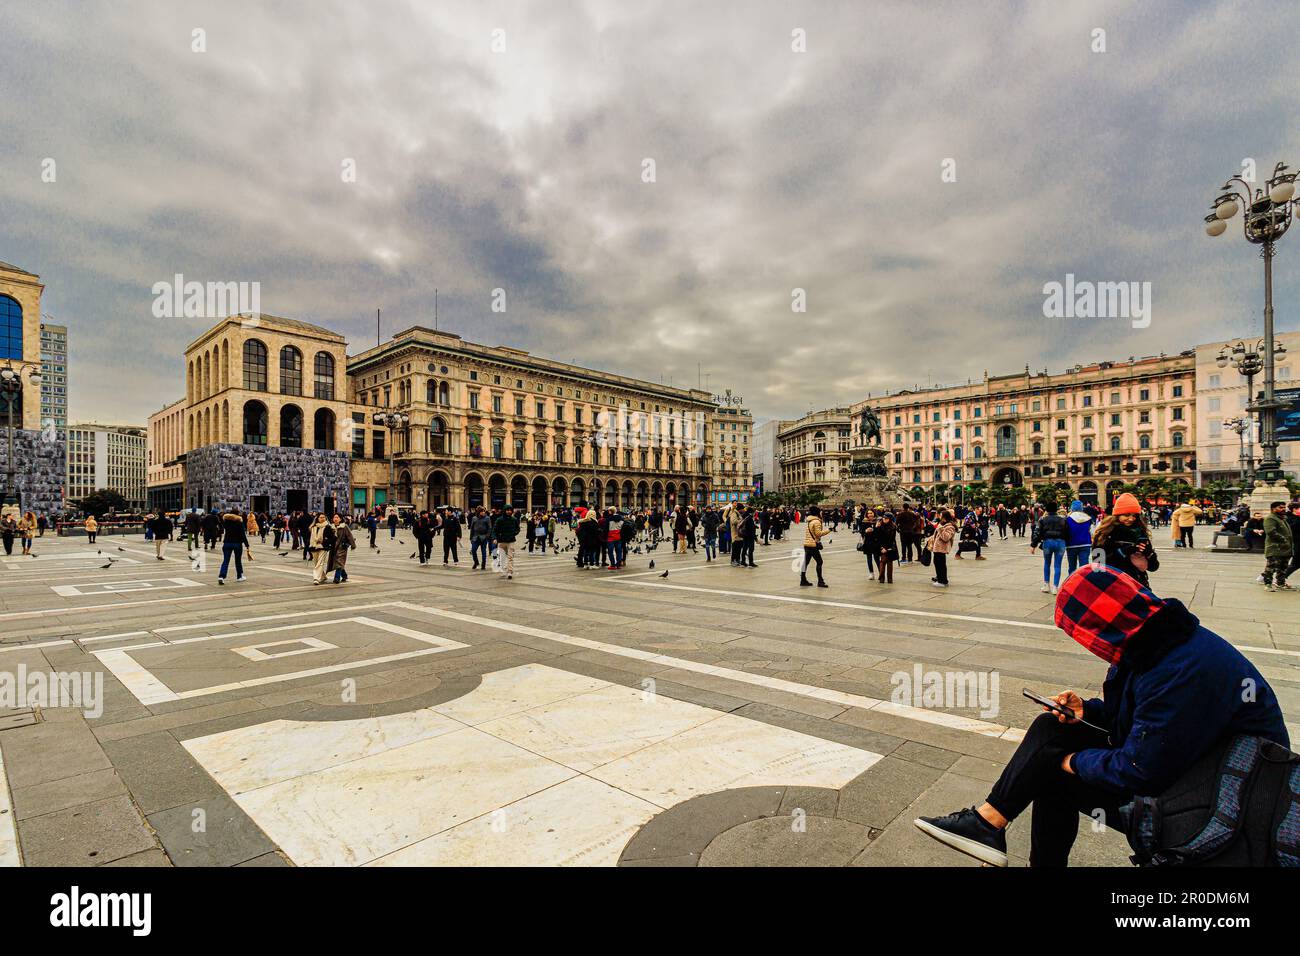 Au coeur de Milan: Piazza del Duomo et la galerie Vittorio Emanuele II - Milan, Italie Banque D'Images